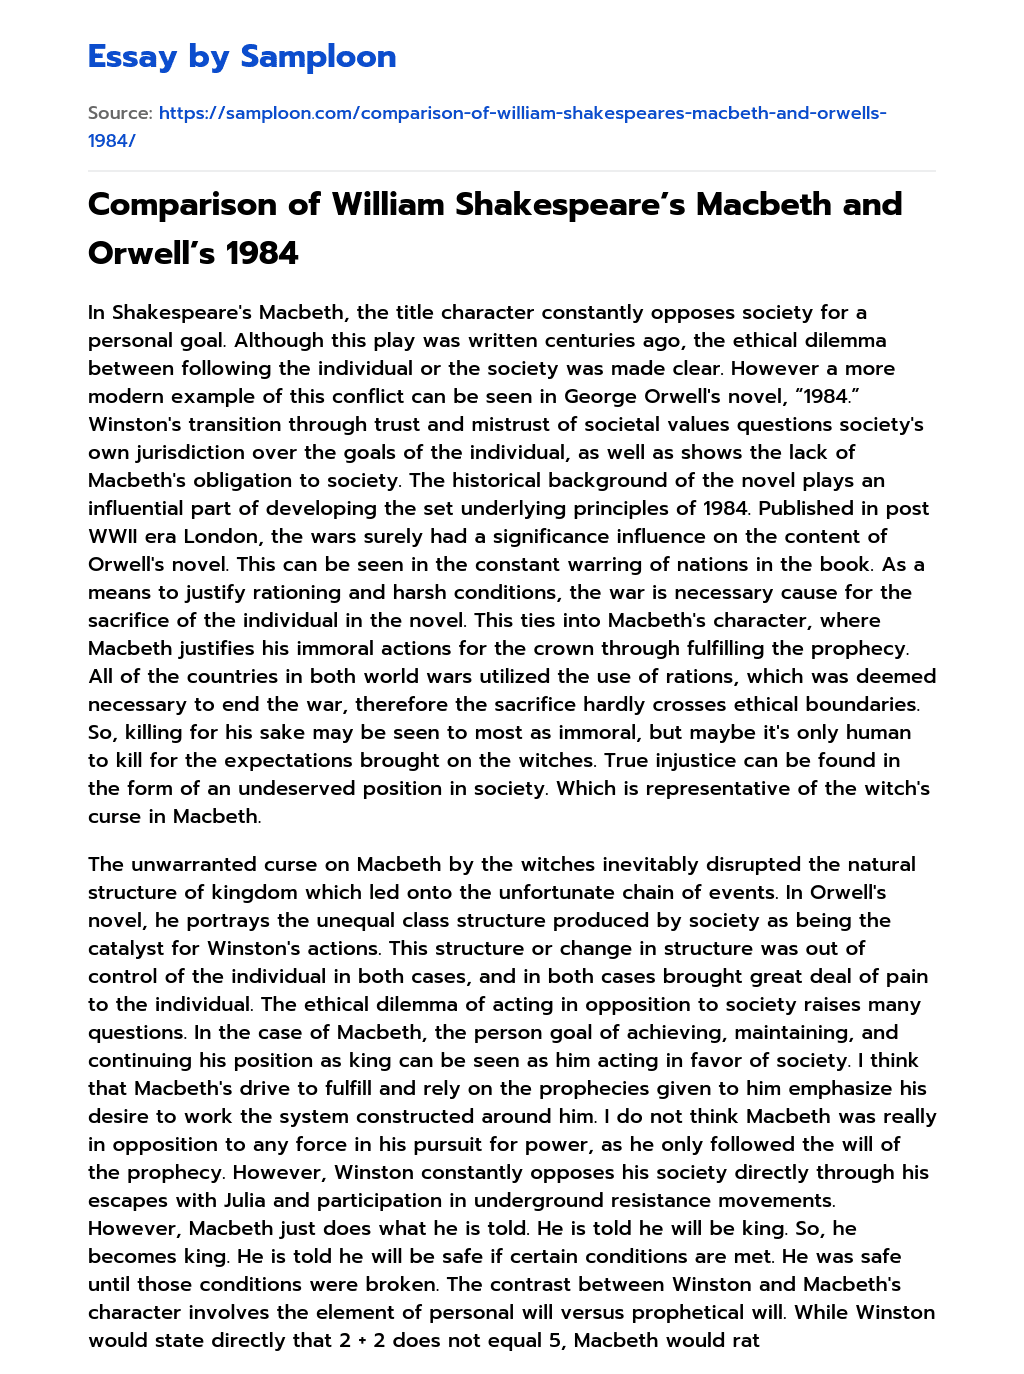 Comparison of William Shakespeare’s Macbeth and Orwell’s 1984 essay